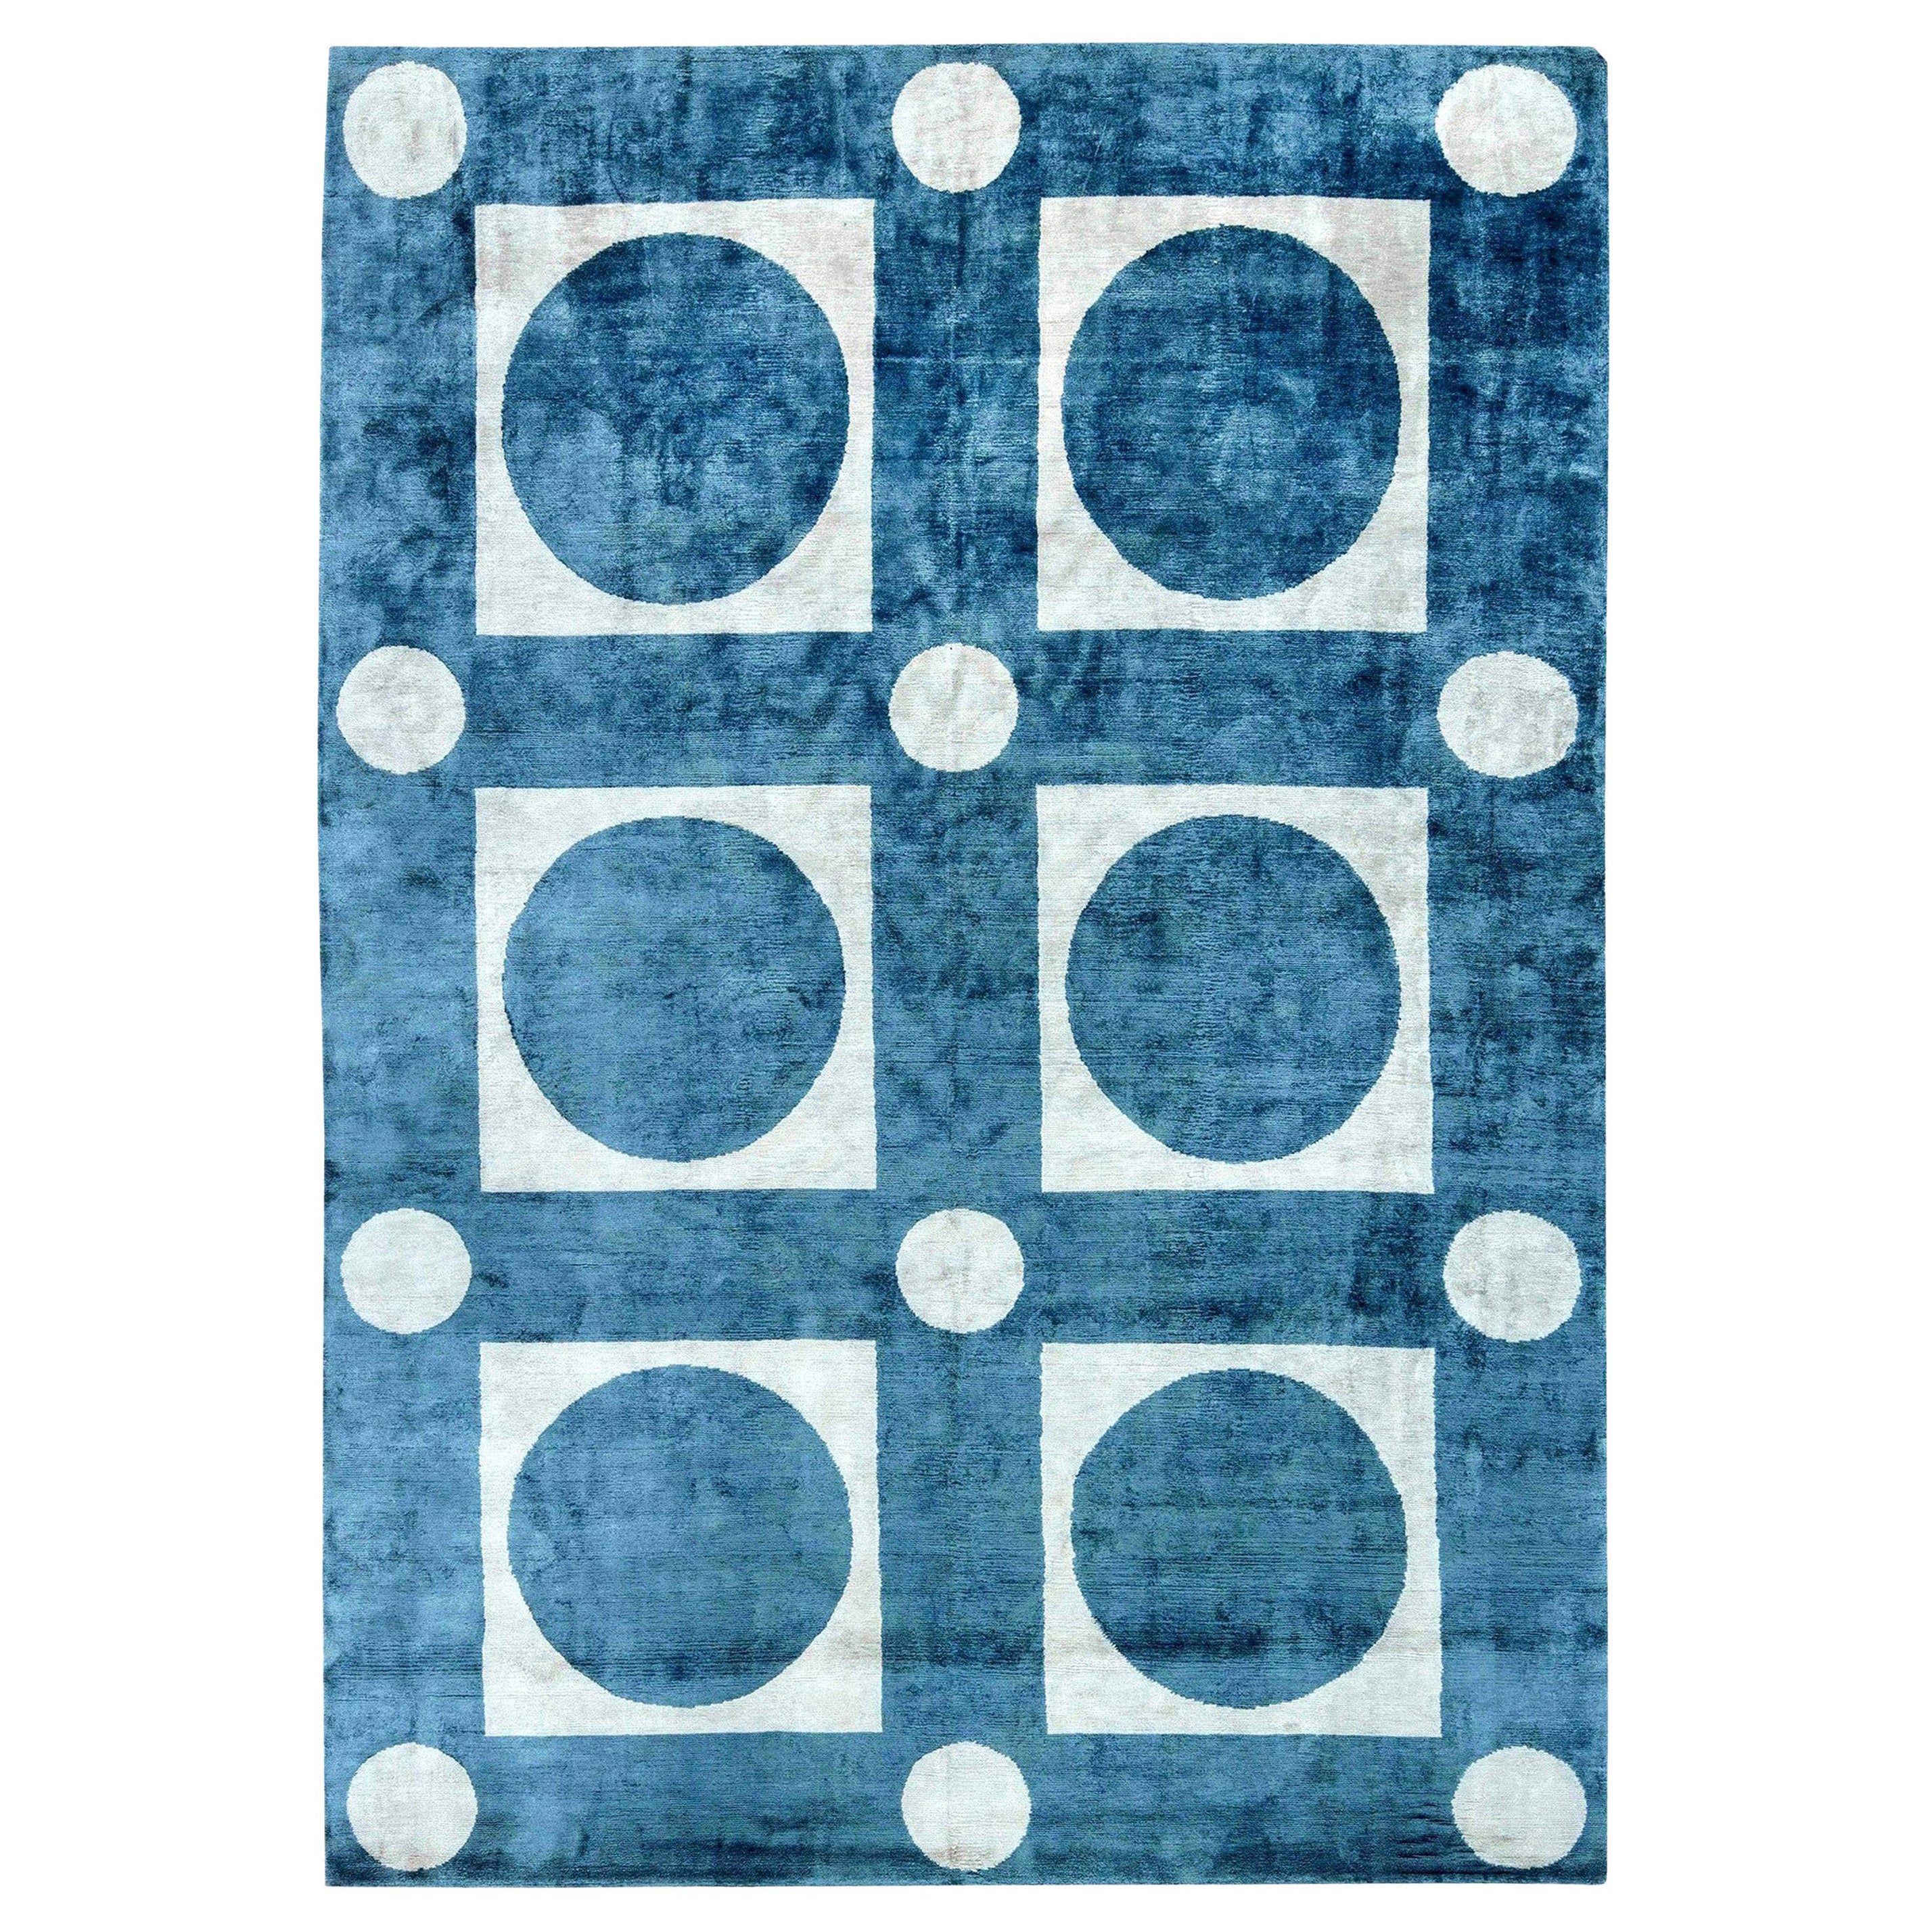 Contemporary Geometric Blue and White Handmade Silk Rug by Doris Leslie Blau